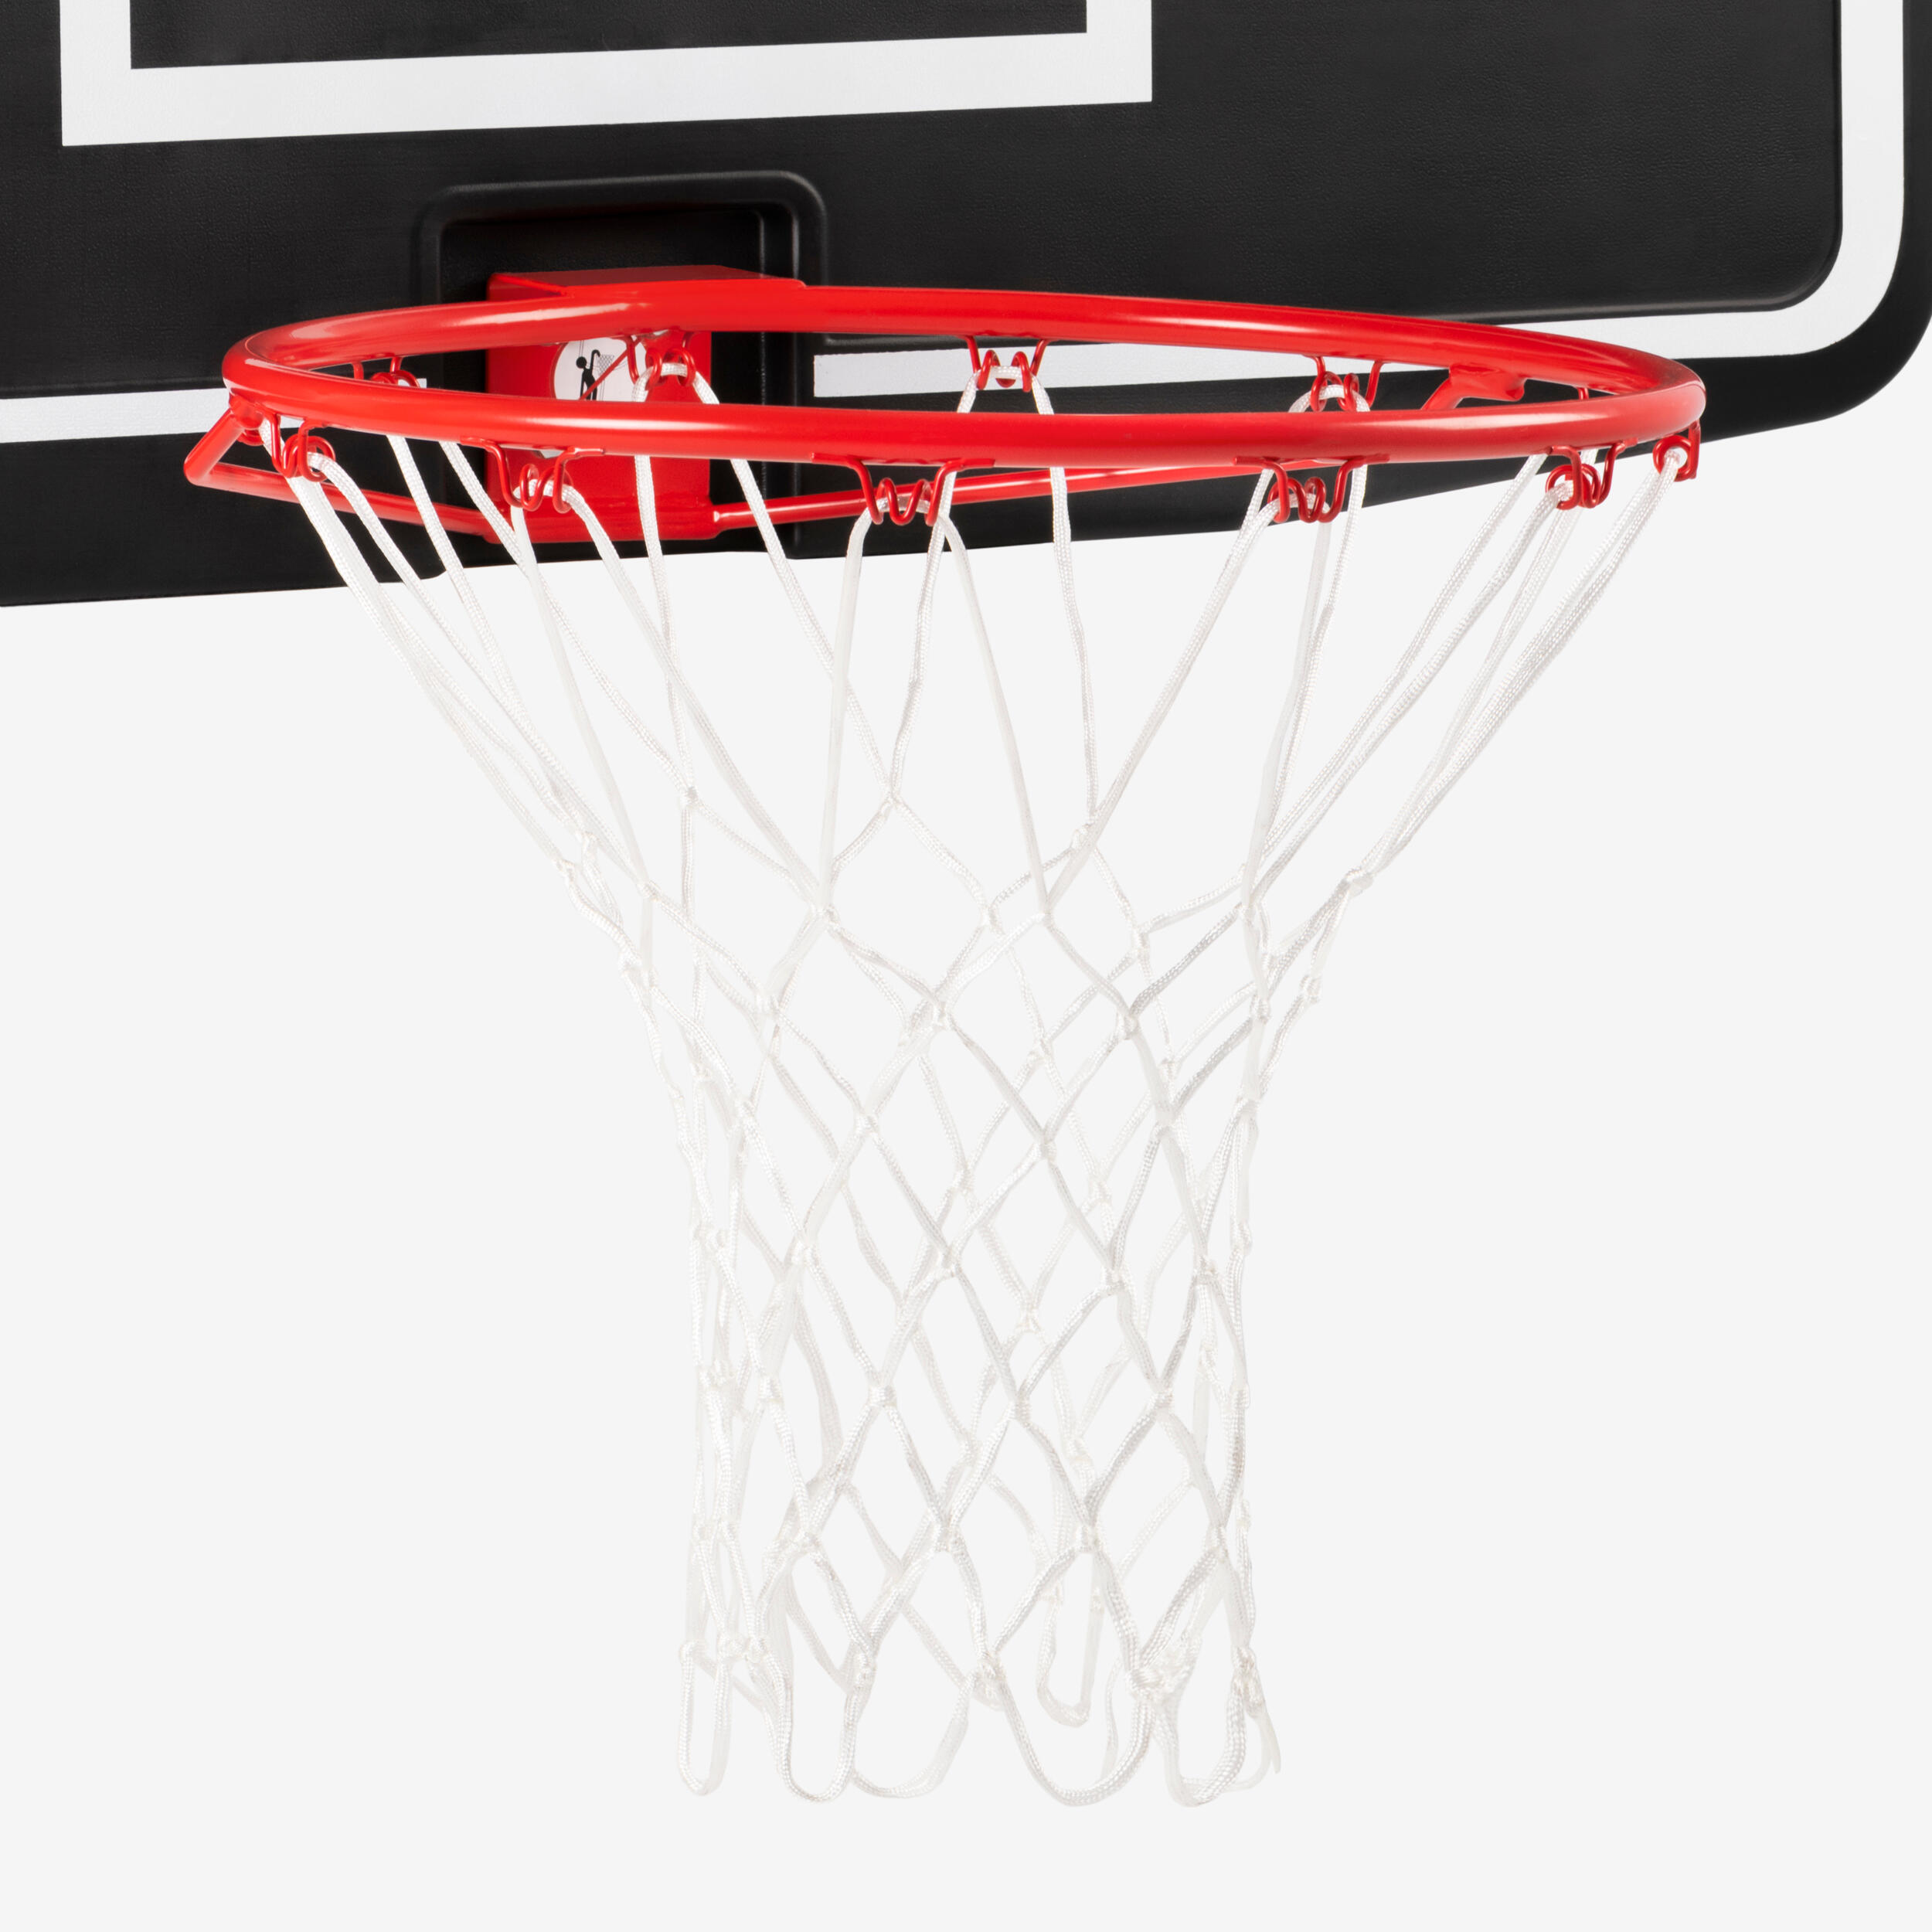 Kids'/Adult Wall-Mounted Basketball Hoop SB100 - Black/Red. 3/4